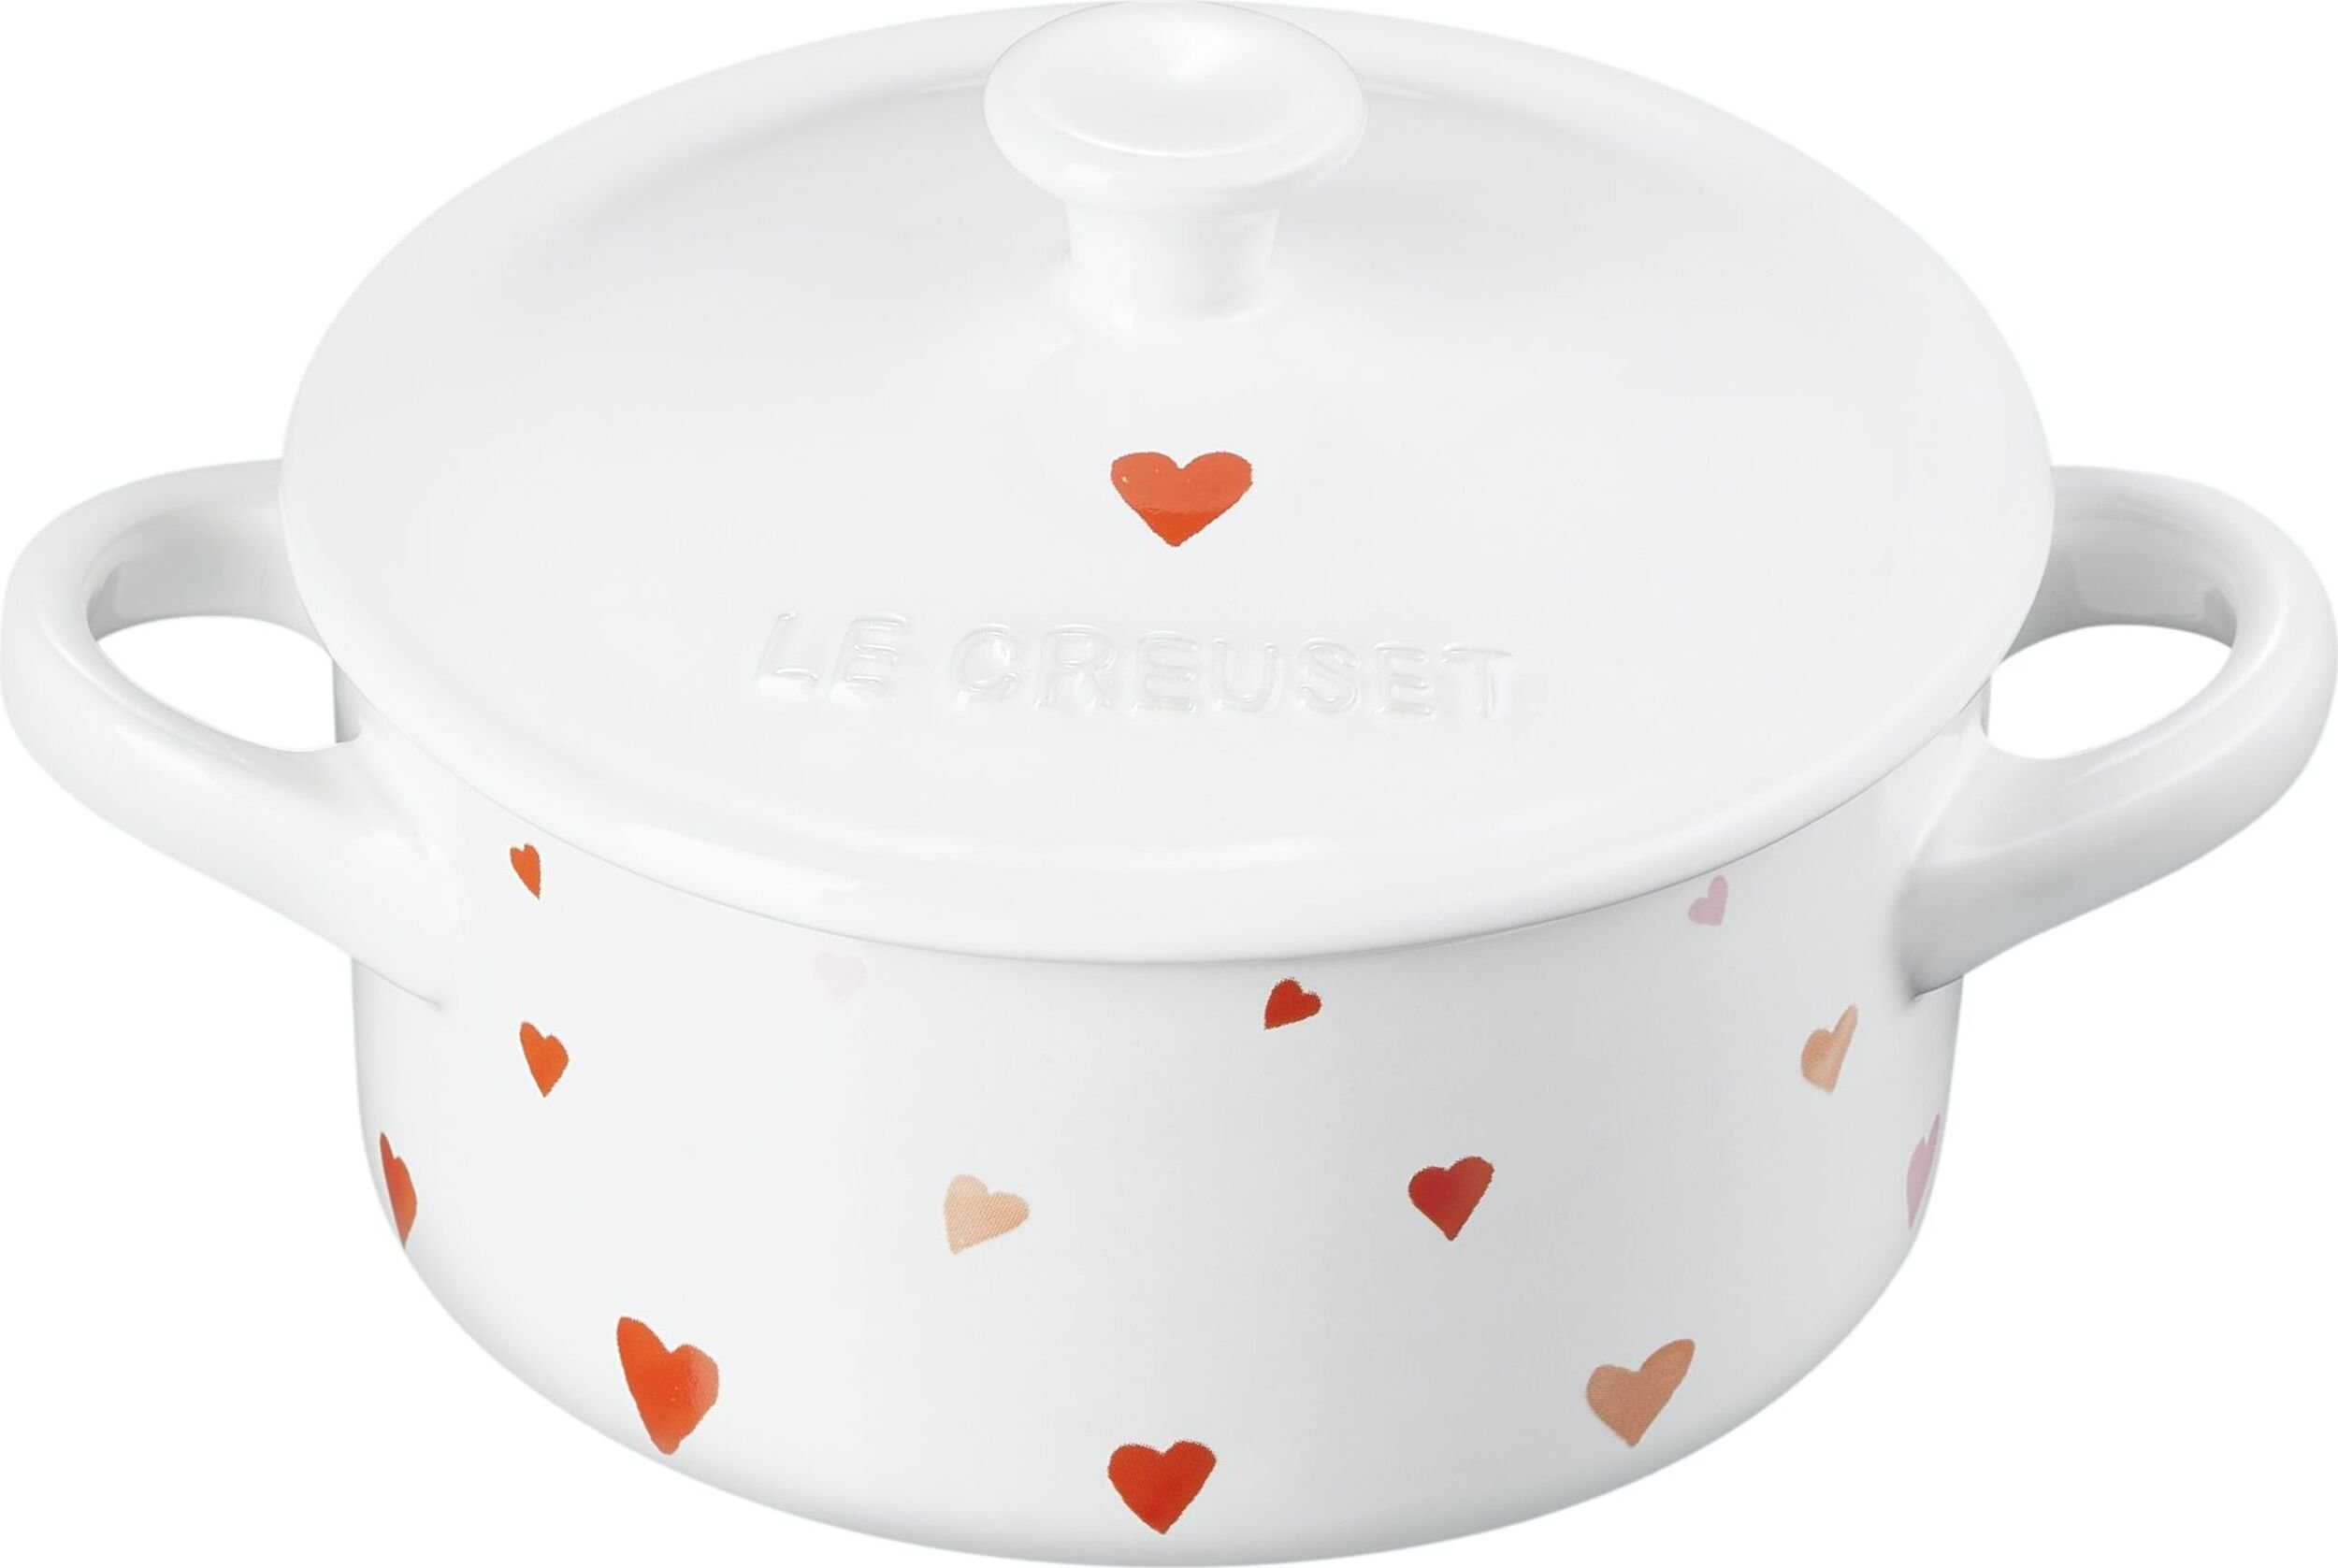 https://3fa-media.com/le-creuset/le-creuset-mini-cocotte-heart-round-cook-and-serve-dish__138446_8e73bb2-s2500x2500.jpg